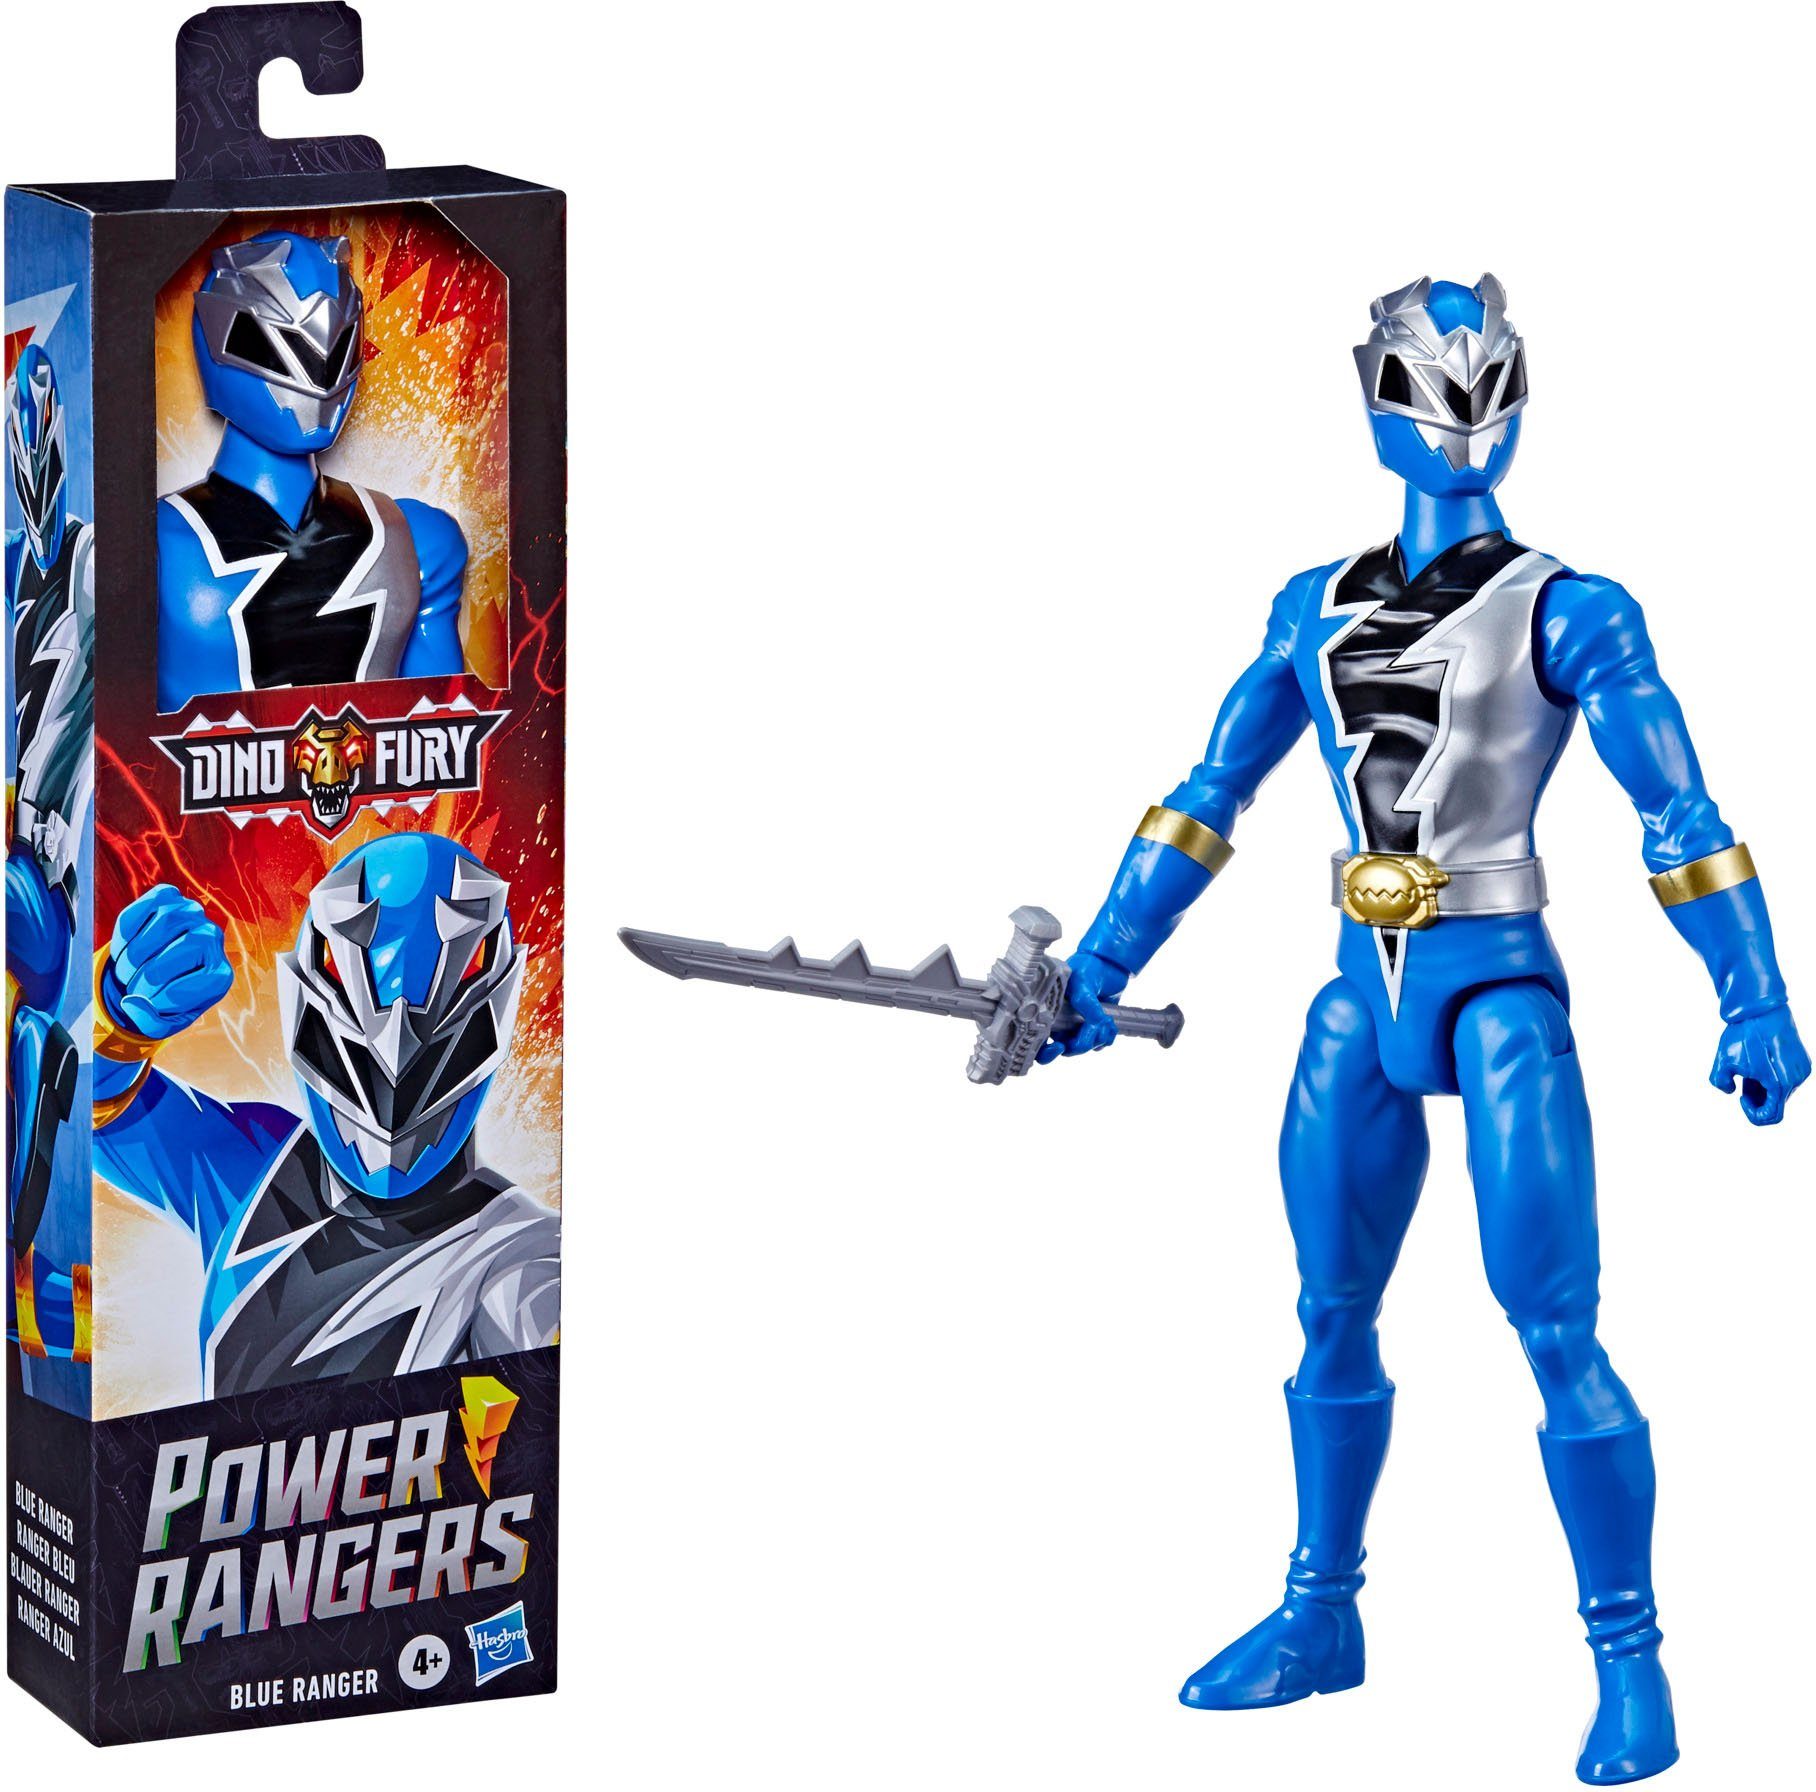 Blauer Rangers Fury Power Ranger, Dino Actionfigur Hasbro 30 cm